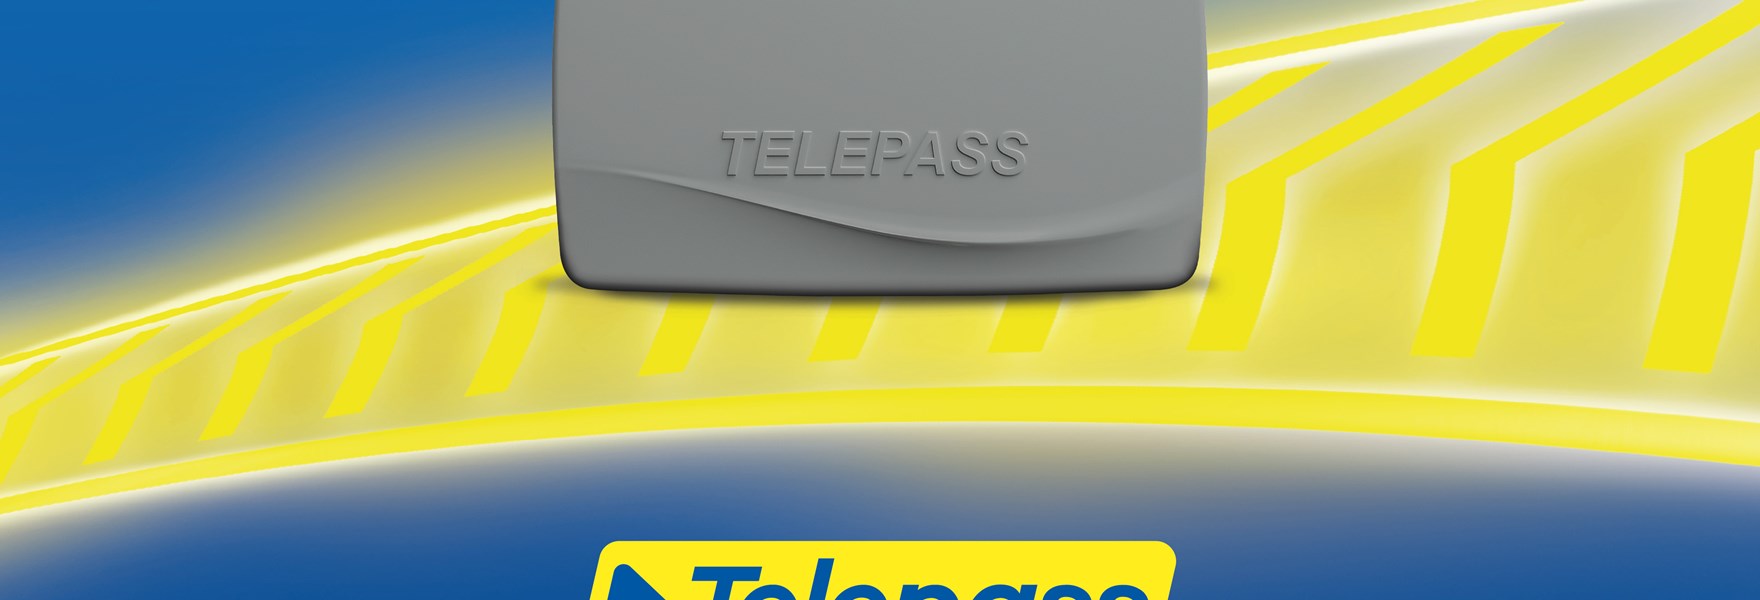 Telepass Family 4000X2250px 